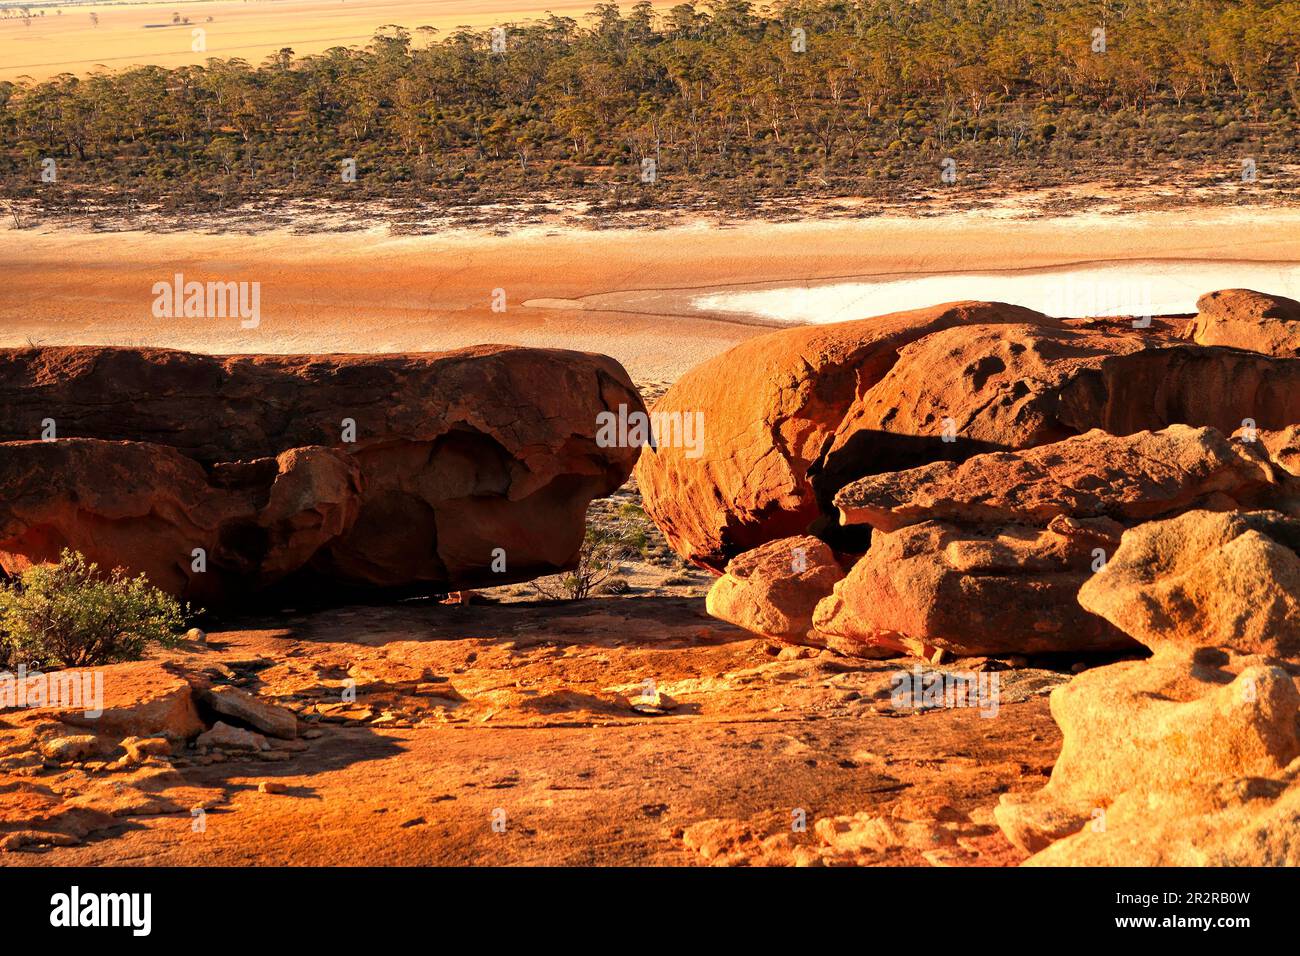 Baladjie Rock and Salt Lake, Baladjie Nature Reserve, Boodarockin, Western Australia Stock Photo